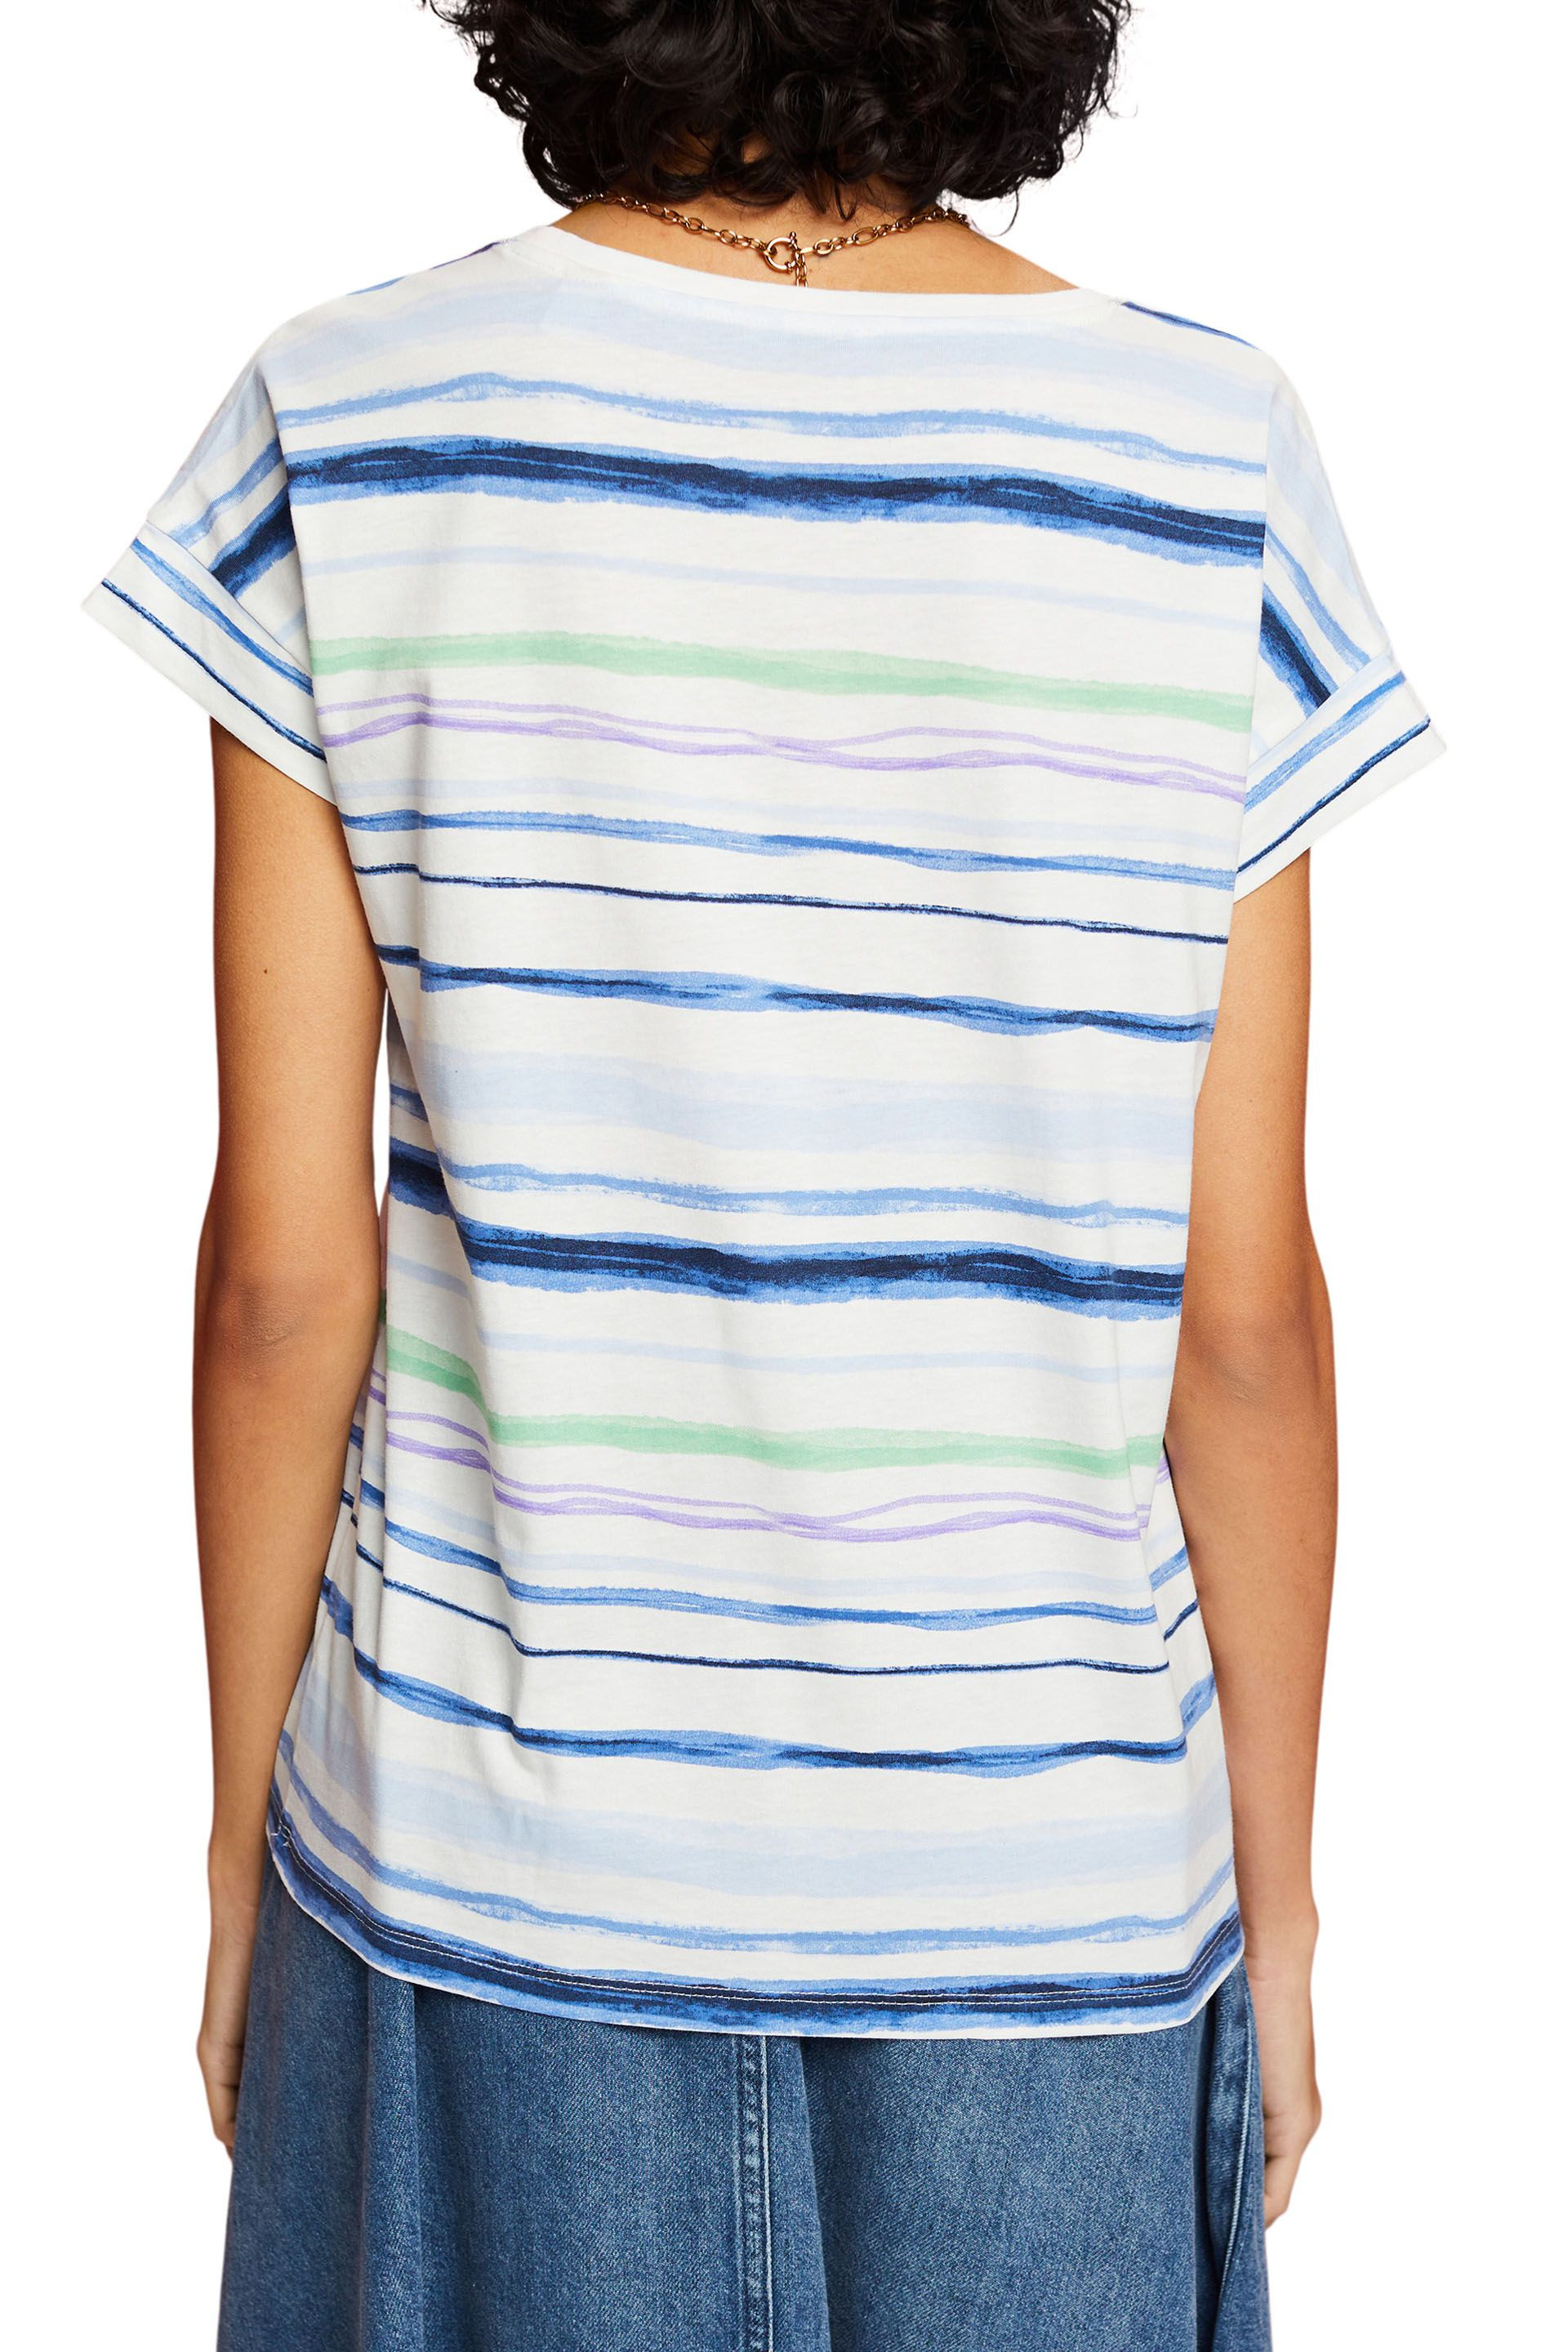 Esprit - Striped cotton T-shirt, Blue, large image number 3